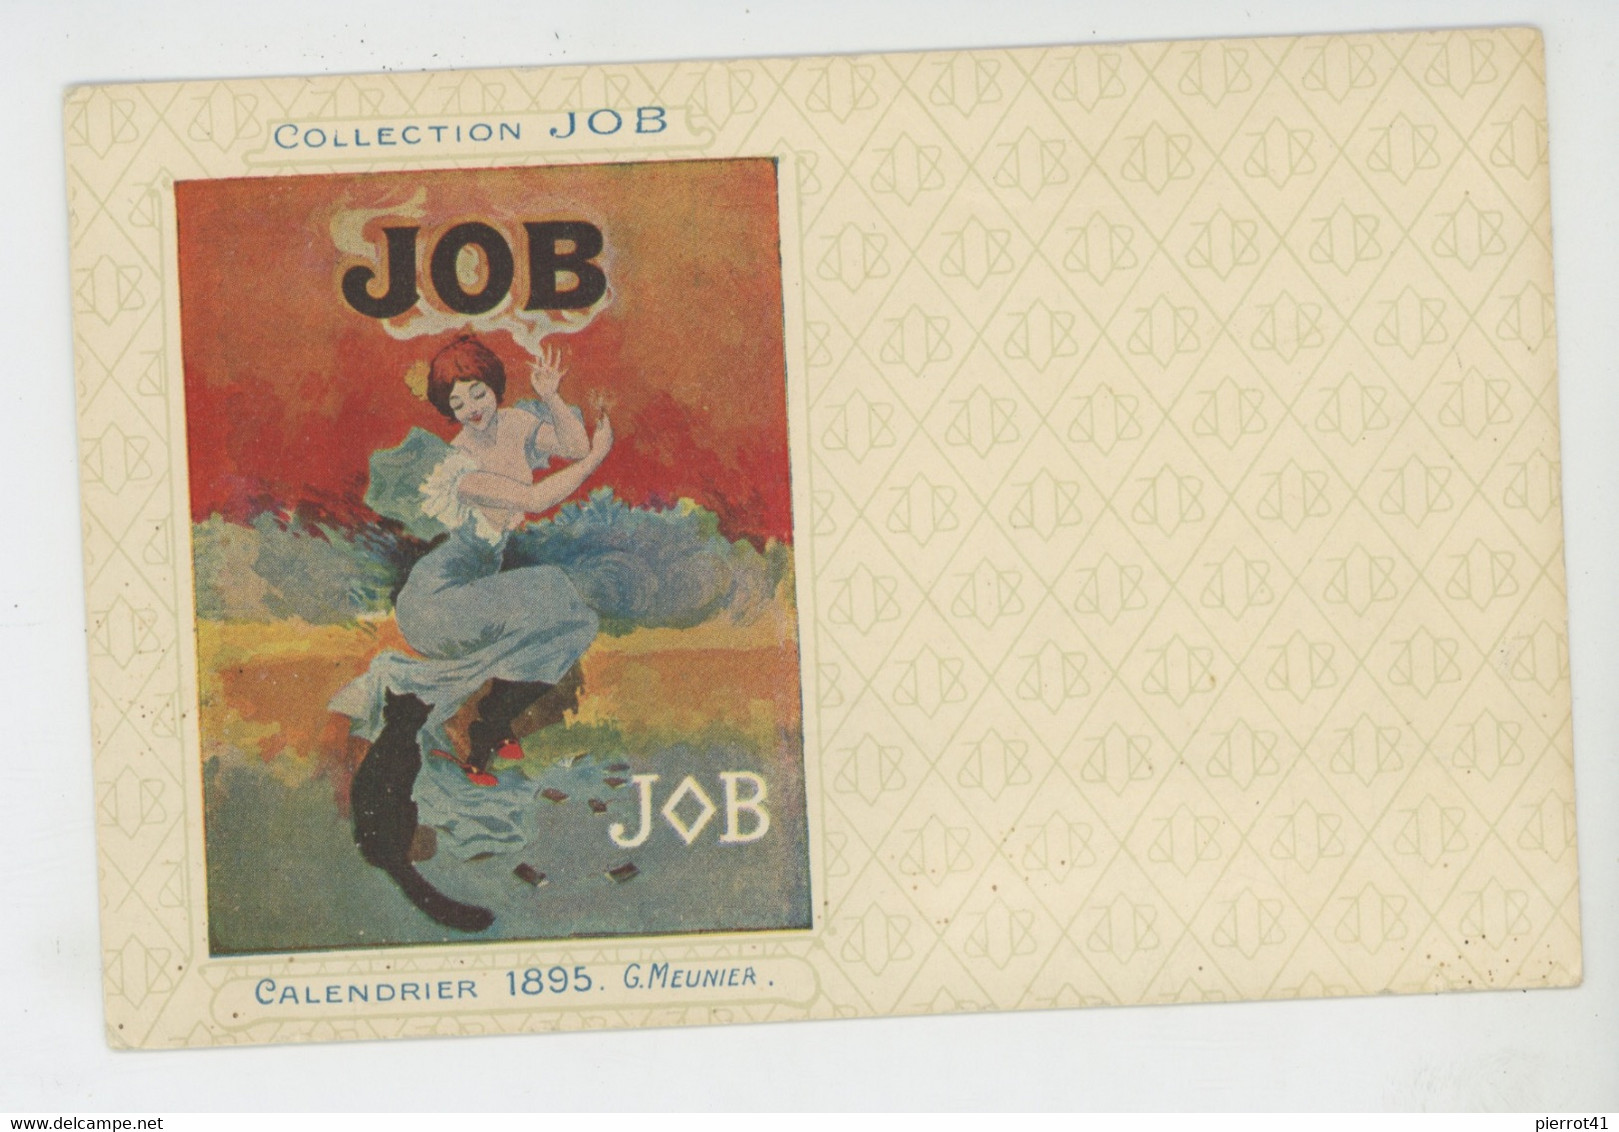 Illustrateur G. MEUNIER - COLLECTION JOB - Jolie Carte Fantaisie Femme ART NOUVEAU Avec Chat Noir - CALENDRIER 1895 - Meunier, G.